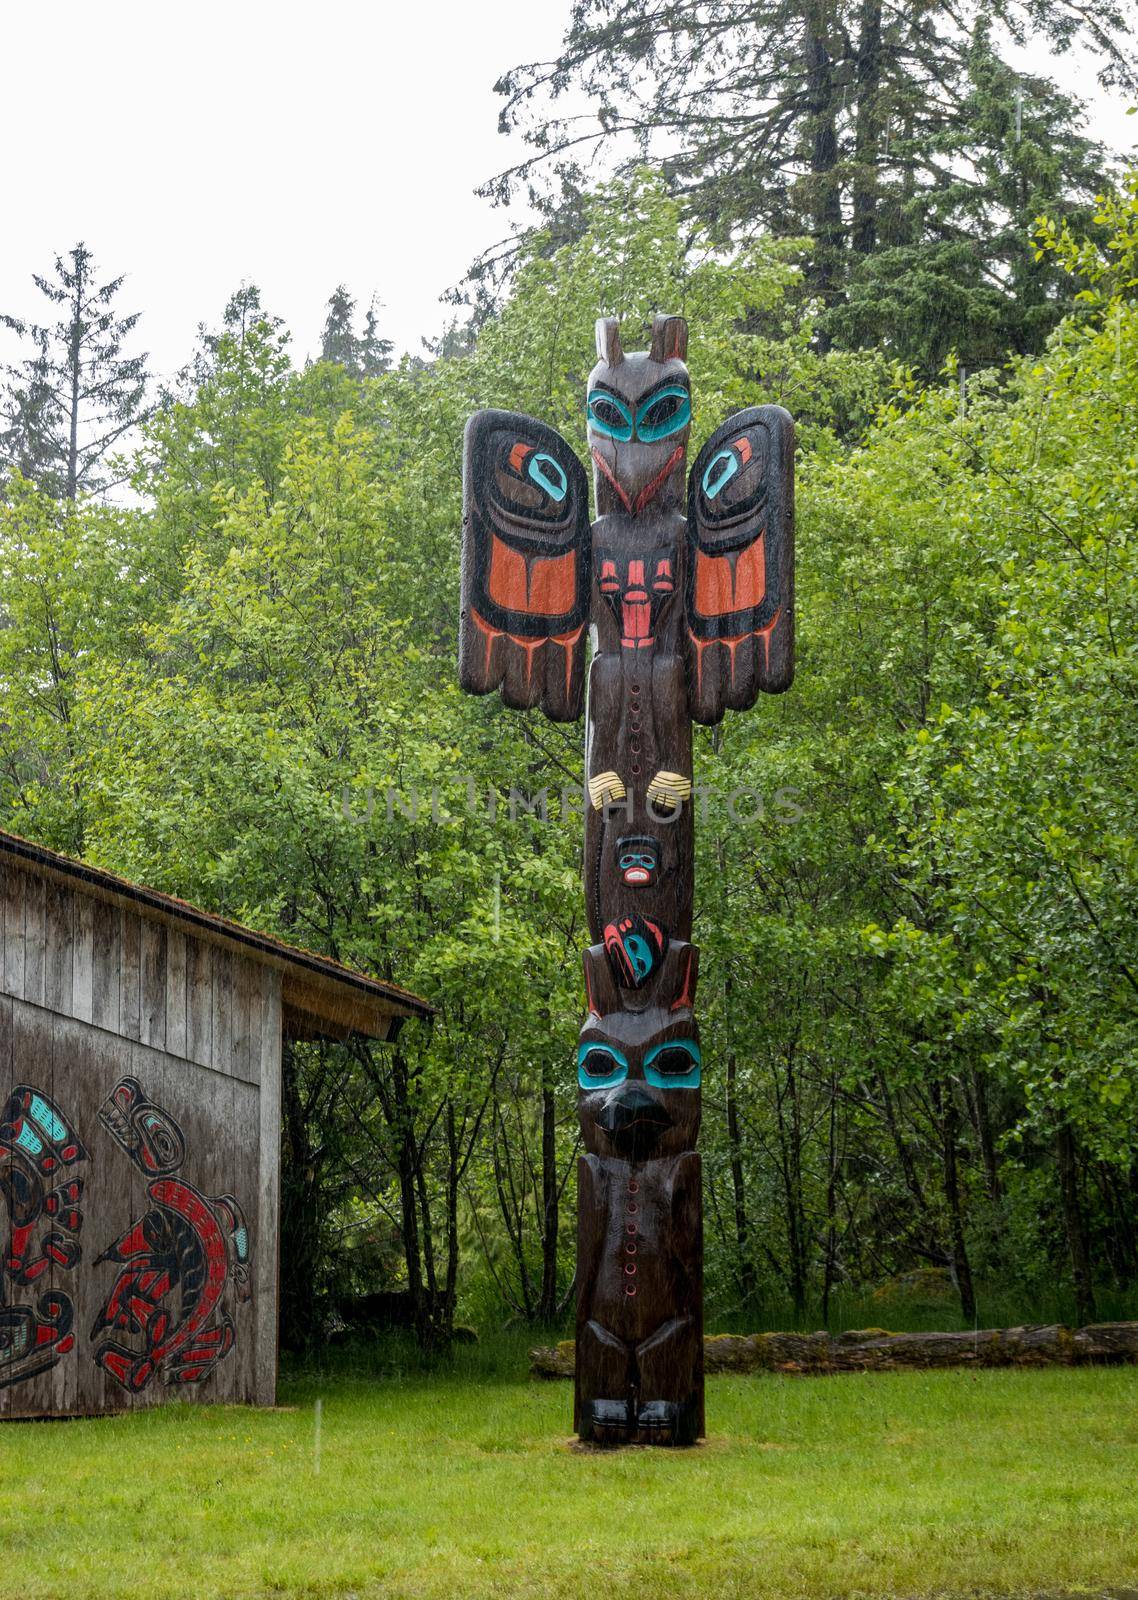 Totem pole in the rain in Ketchikan Alaska by steheap